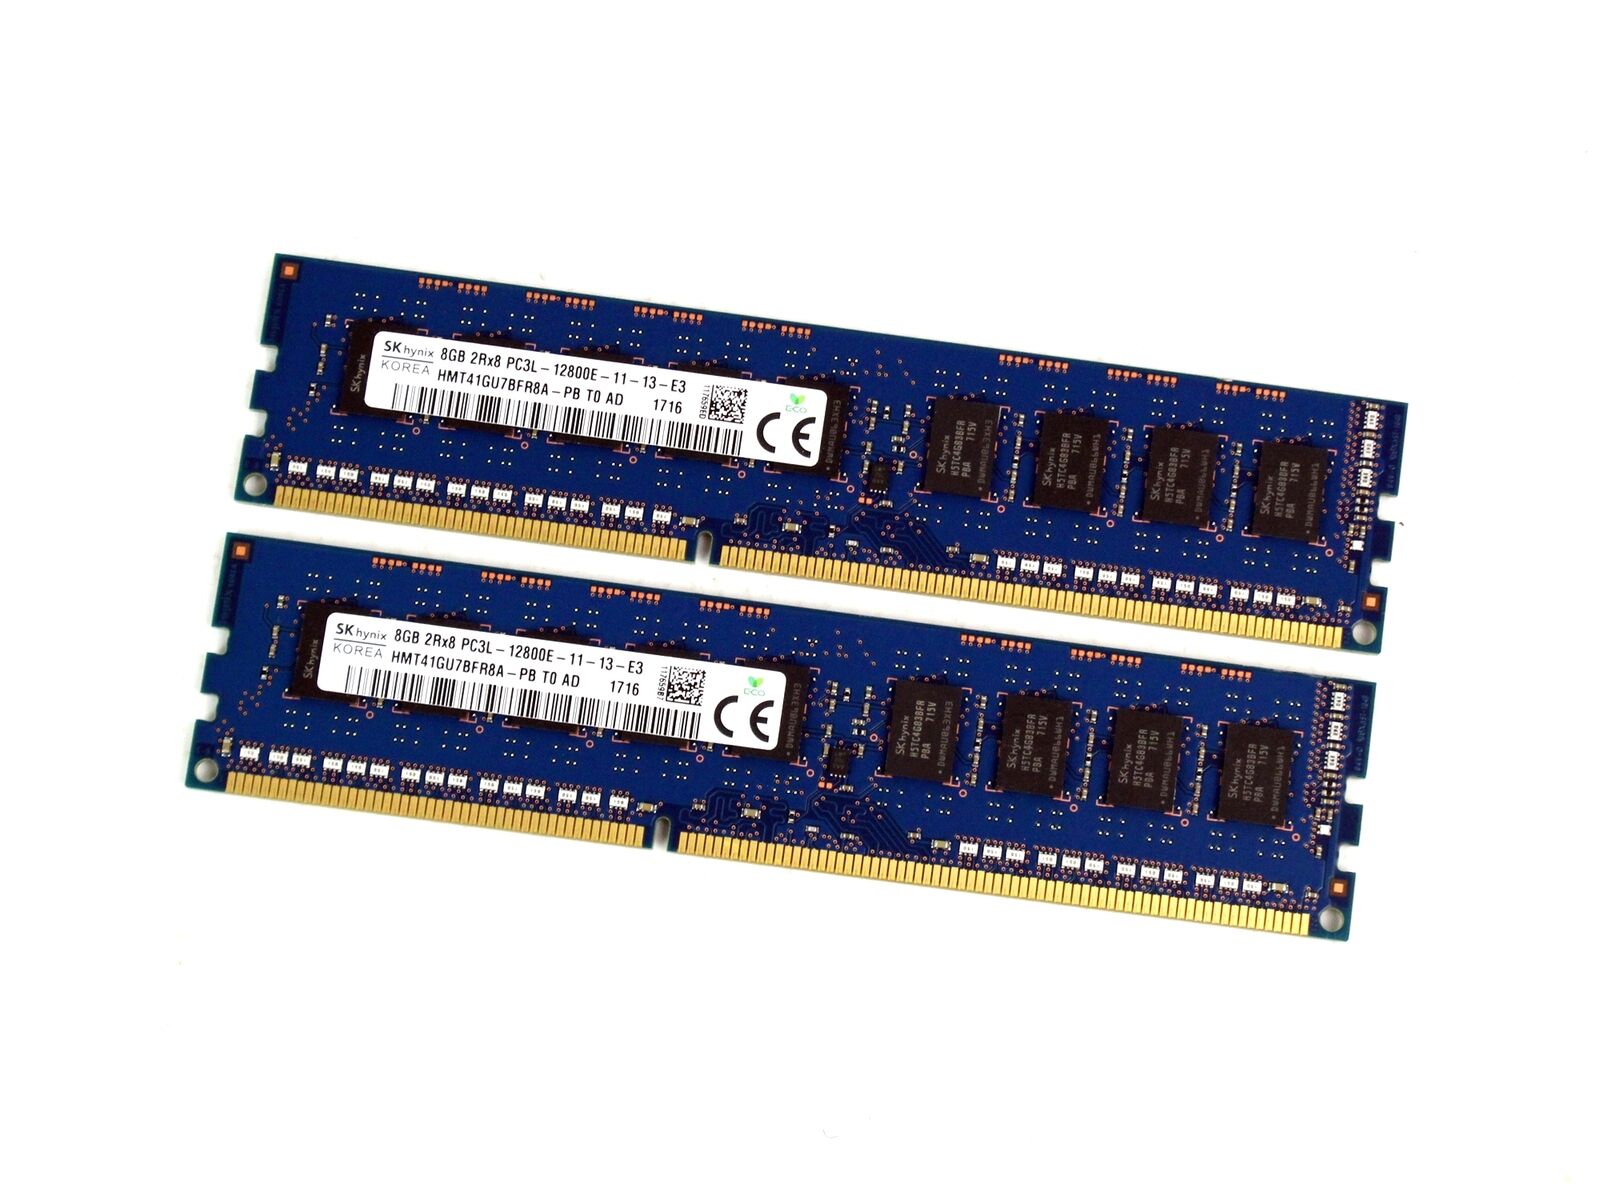 SKHynix 16GB 2x8GB PC3L-12800E DDR3 ECC Server/Workstation Memory HMT41GU7BFR8A